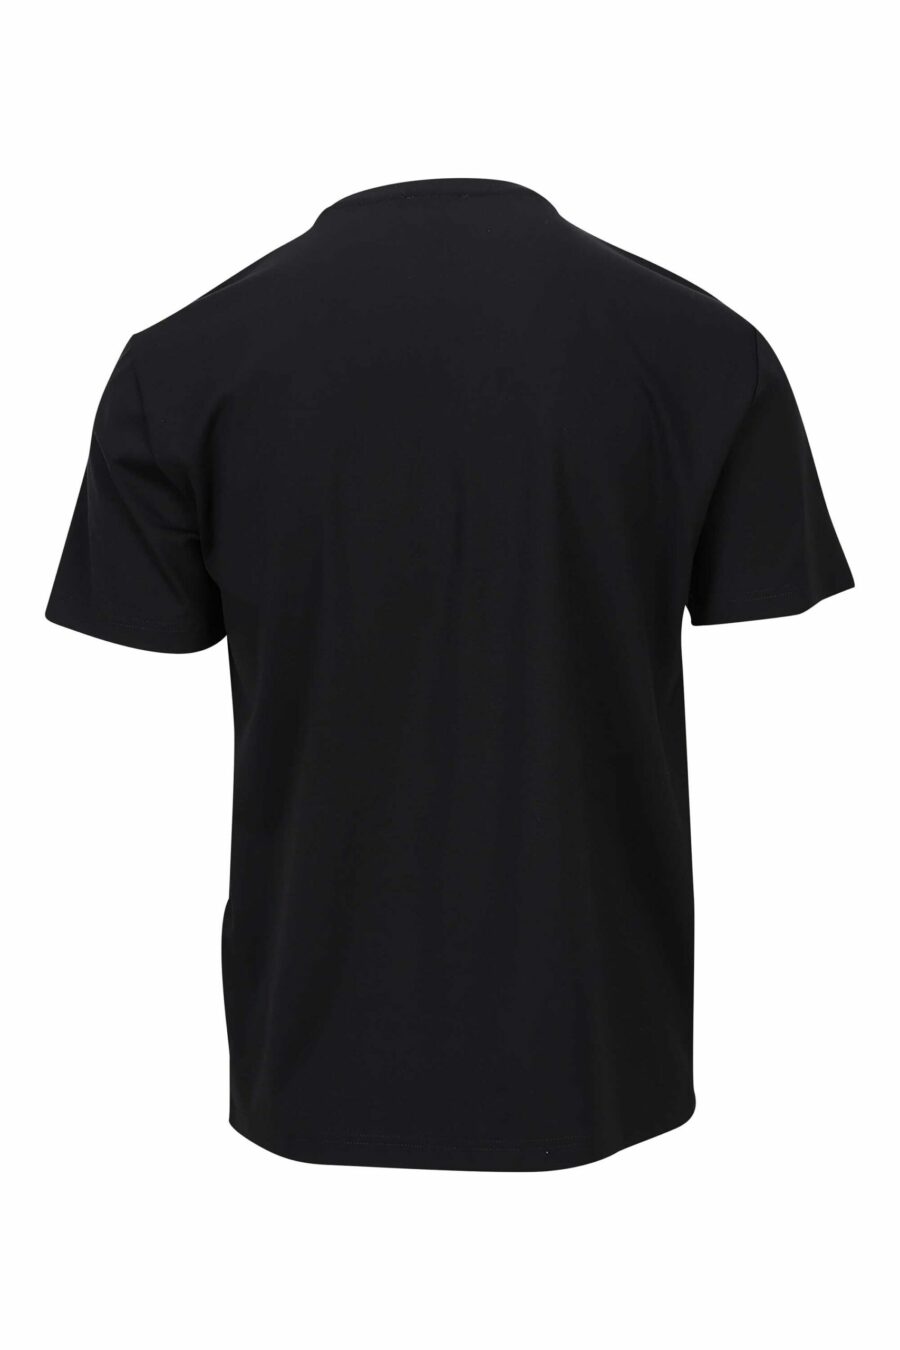 Black T-shirt with monochrome "lux identity" maxilogo - 8057767688646 1 scaled